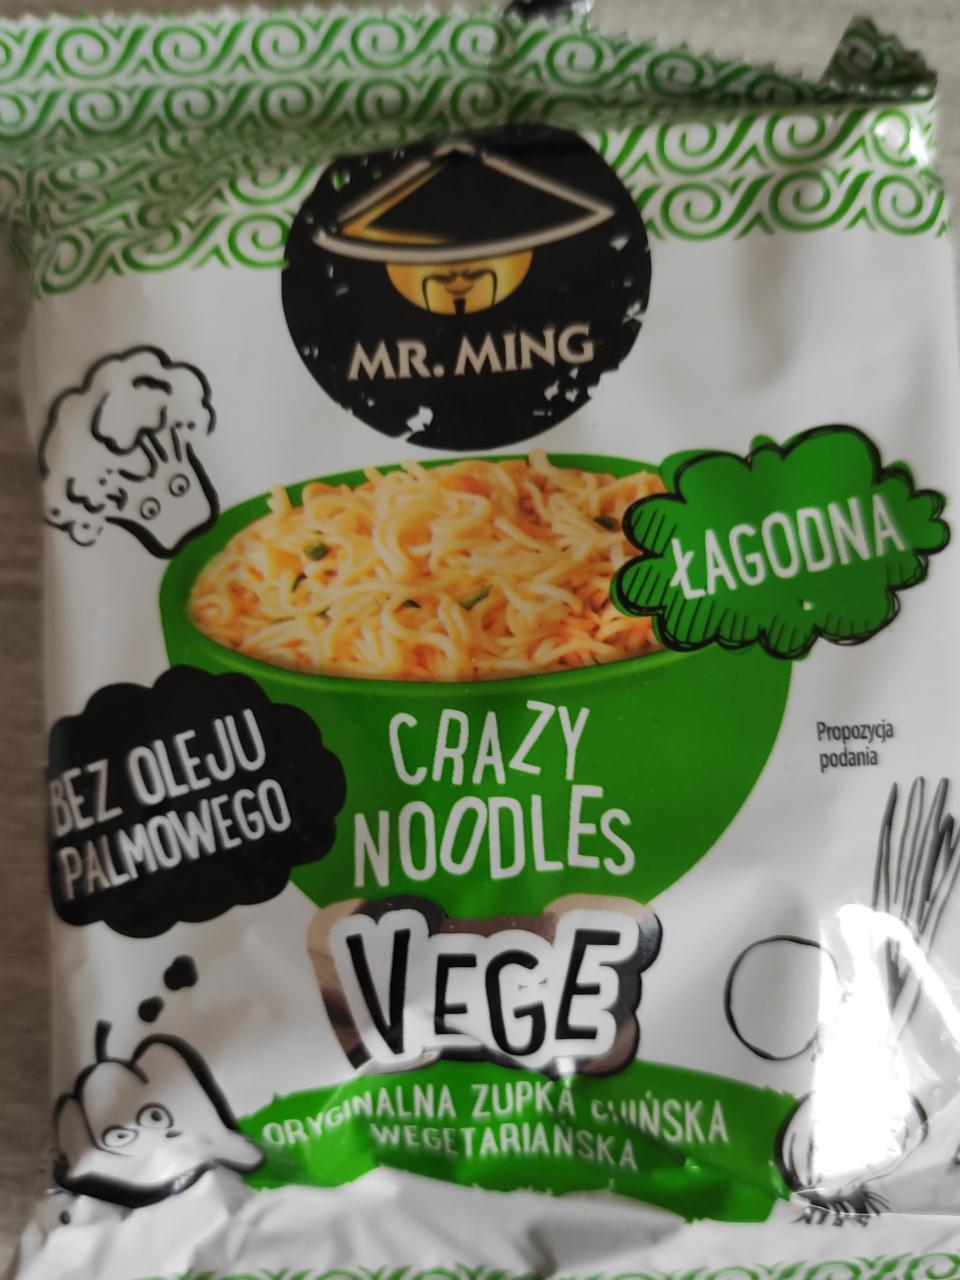 Fotografie - Vege Crazy noodles zupka chińska łagodna bez oleju palmowego Mr. Ming